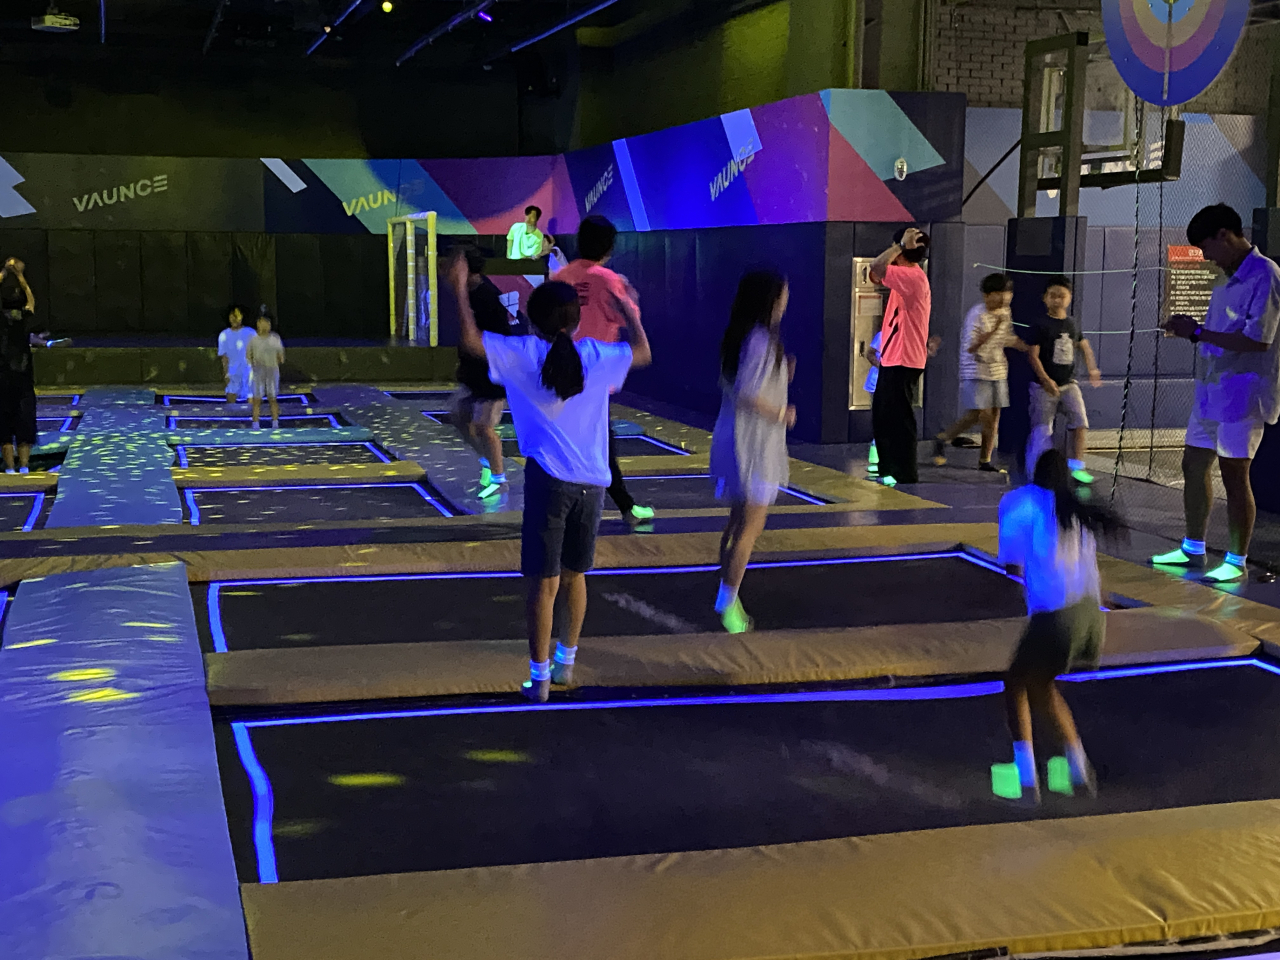 Grown-ups and children alike bounce on trampolines under neon laser lights. (Hwang Joo-young/The Korea Herald)